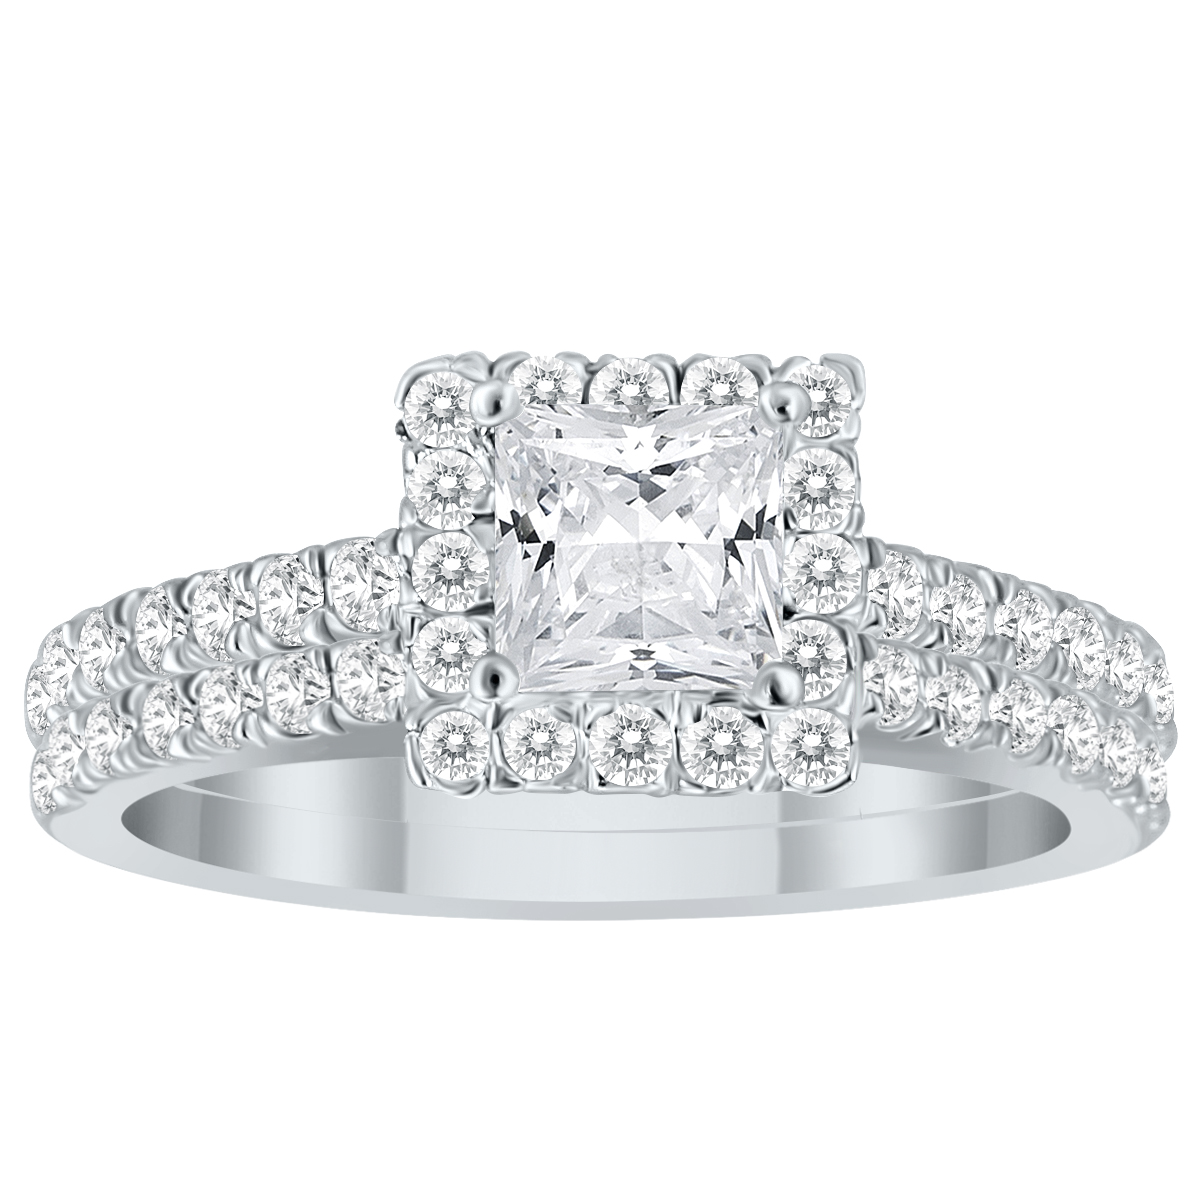 1 1/4 CTW Princess Cut Genuine Diamond Ring in 14K White Gold